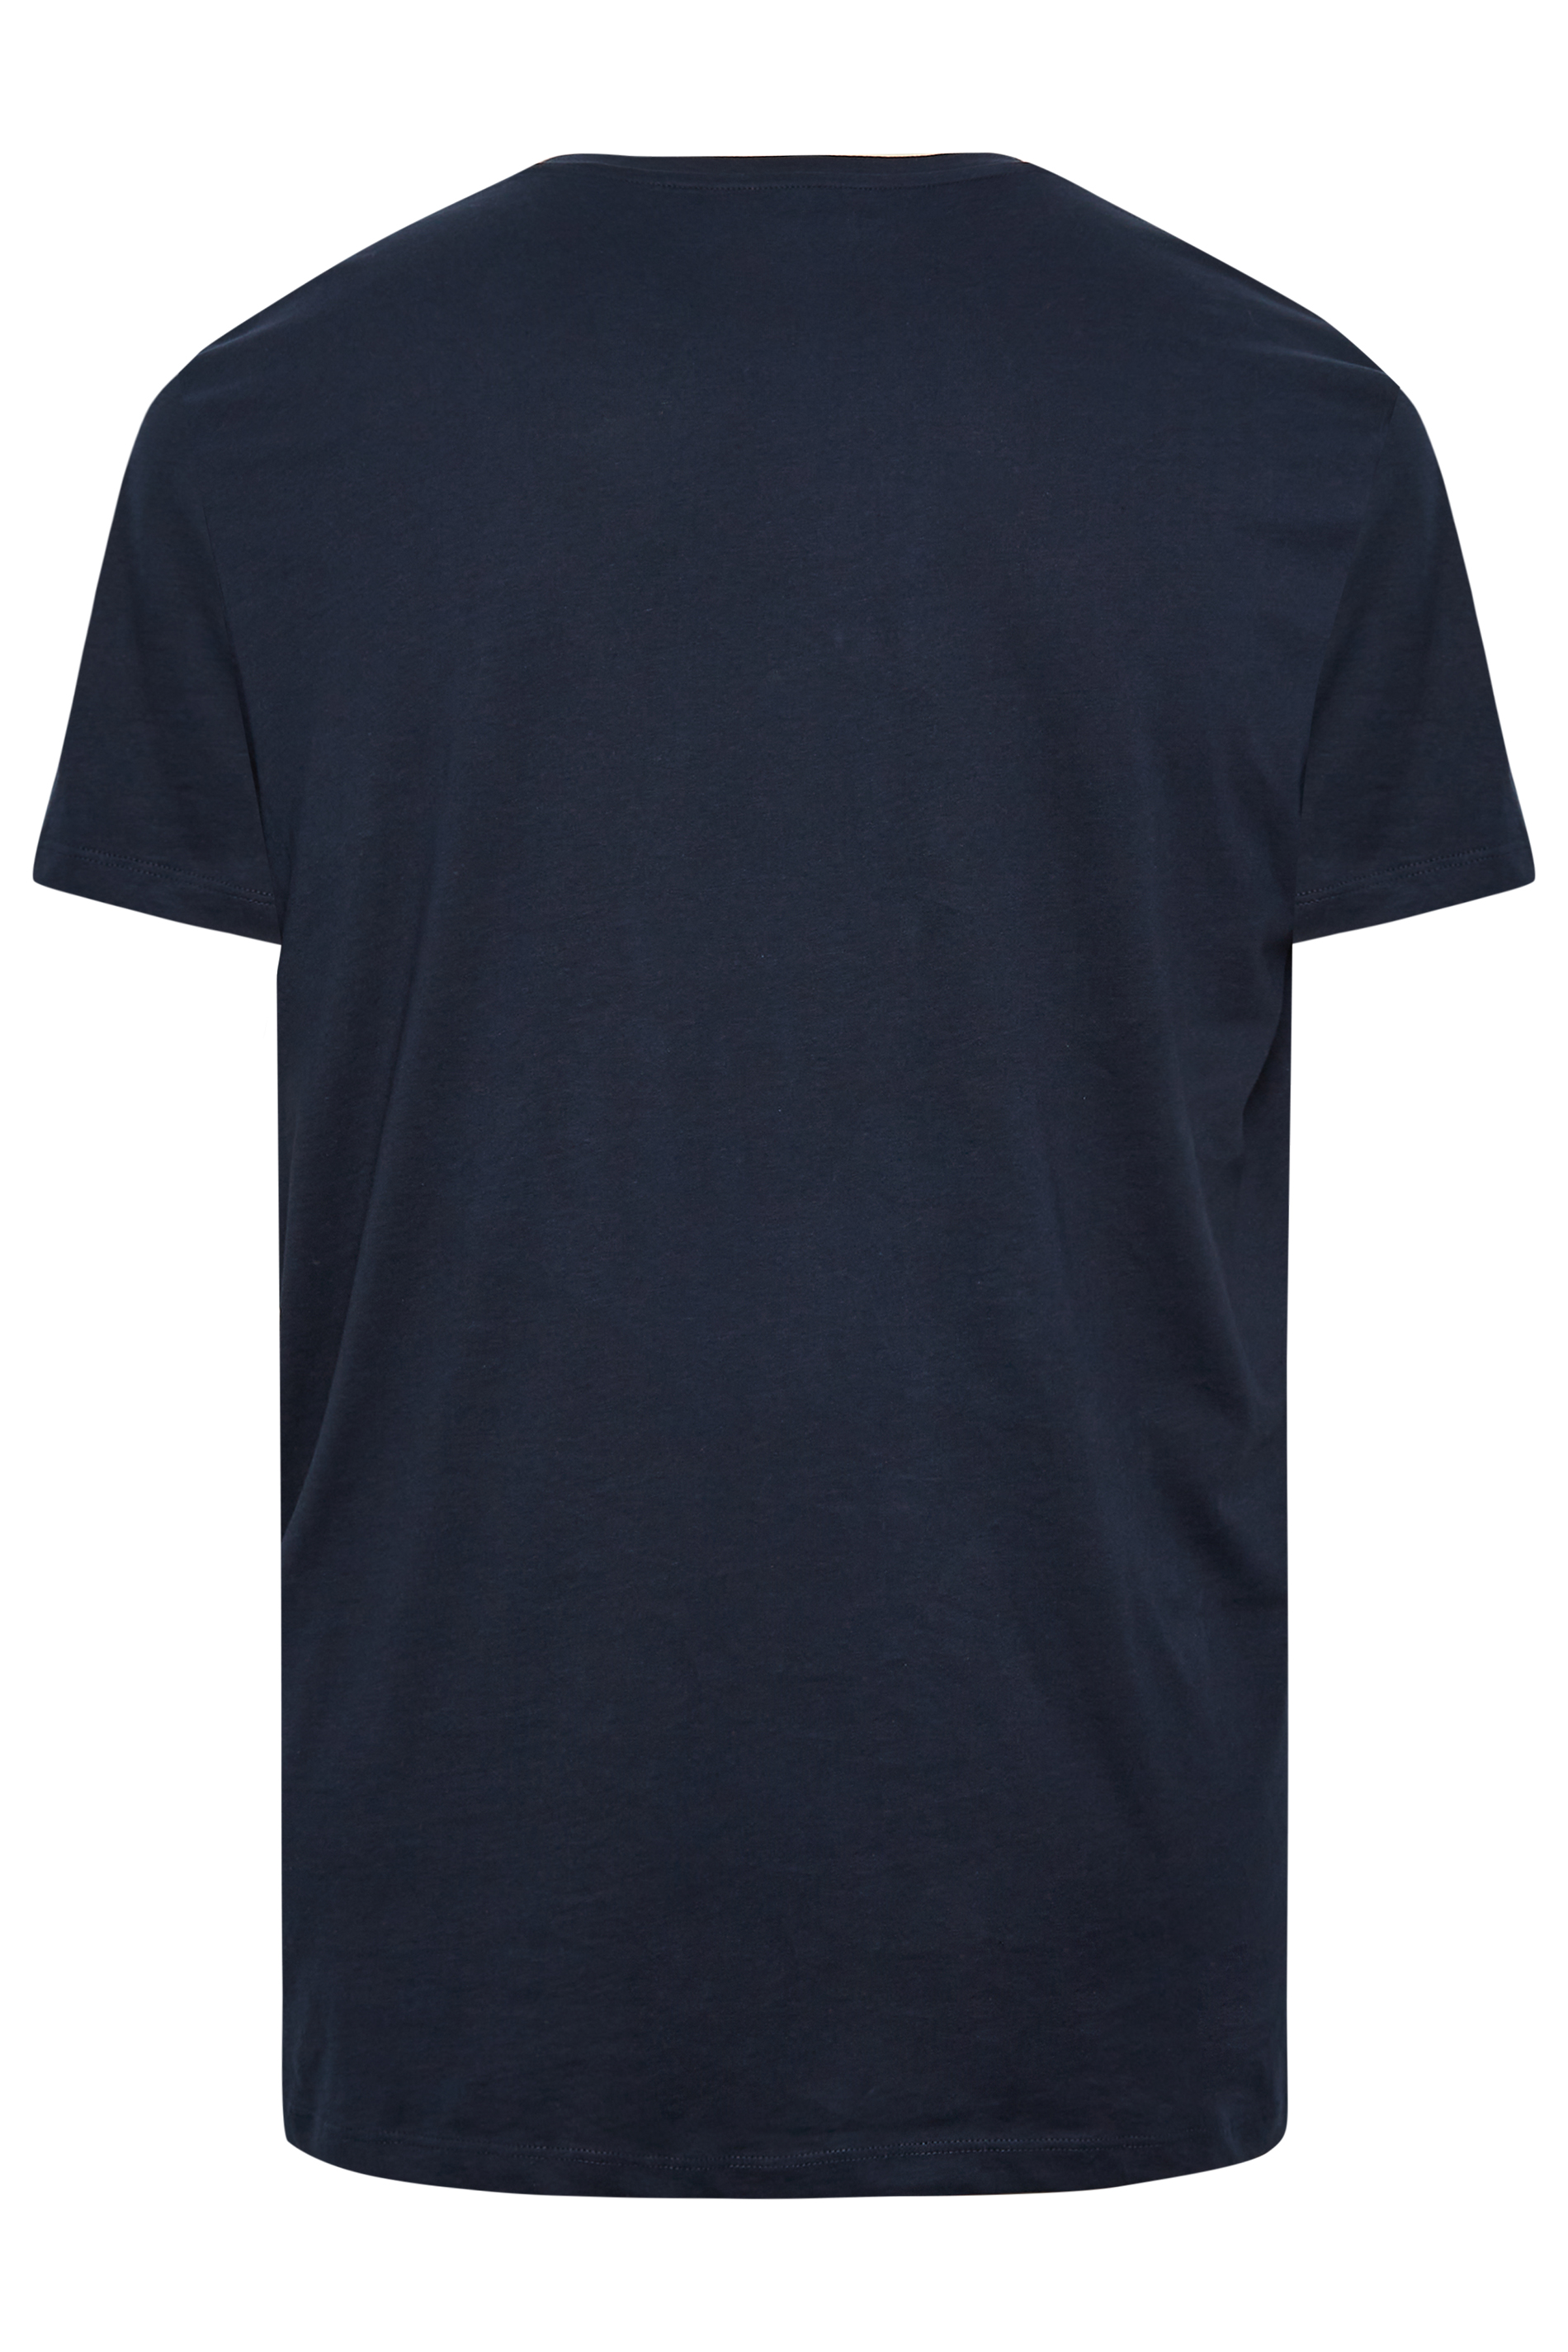 JACK & JONES Big & Tall 5 PACK Black & Blue Logo Printed T-Shirts ...